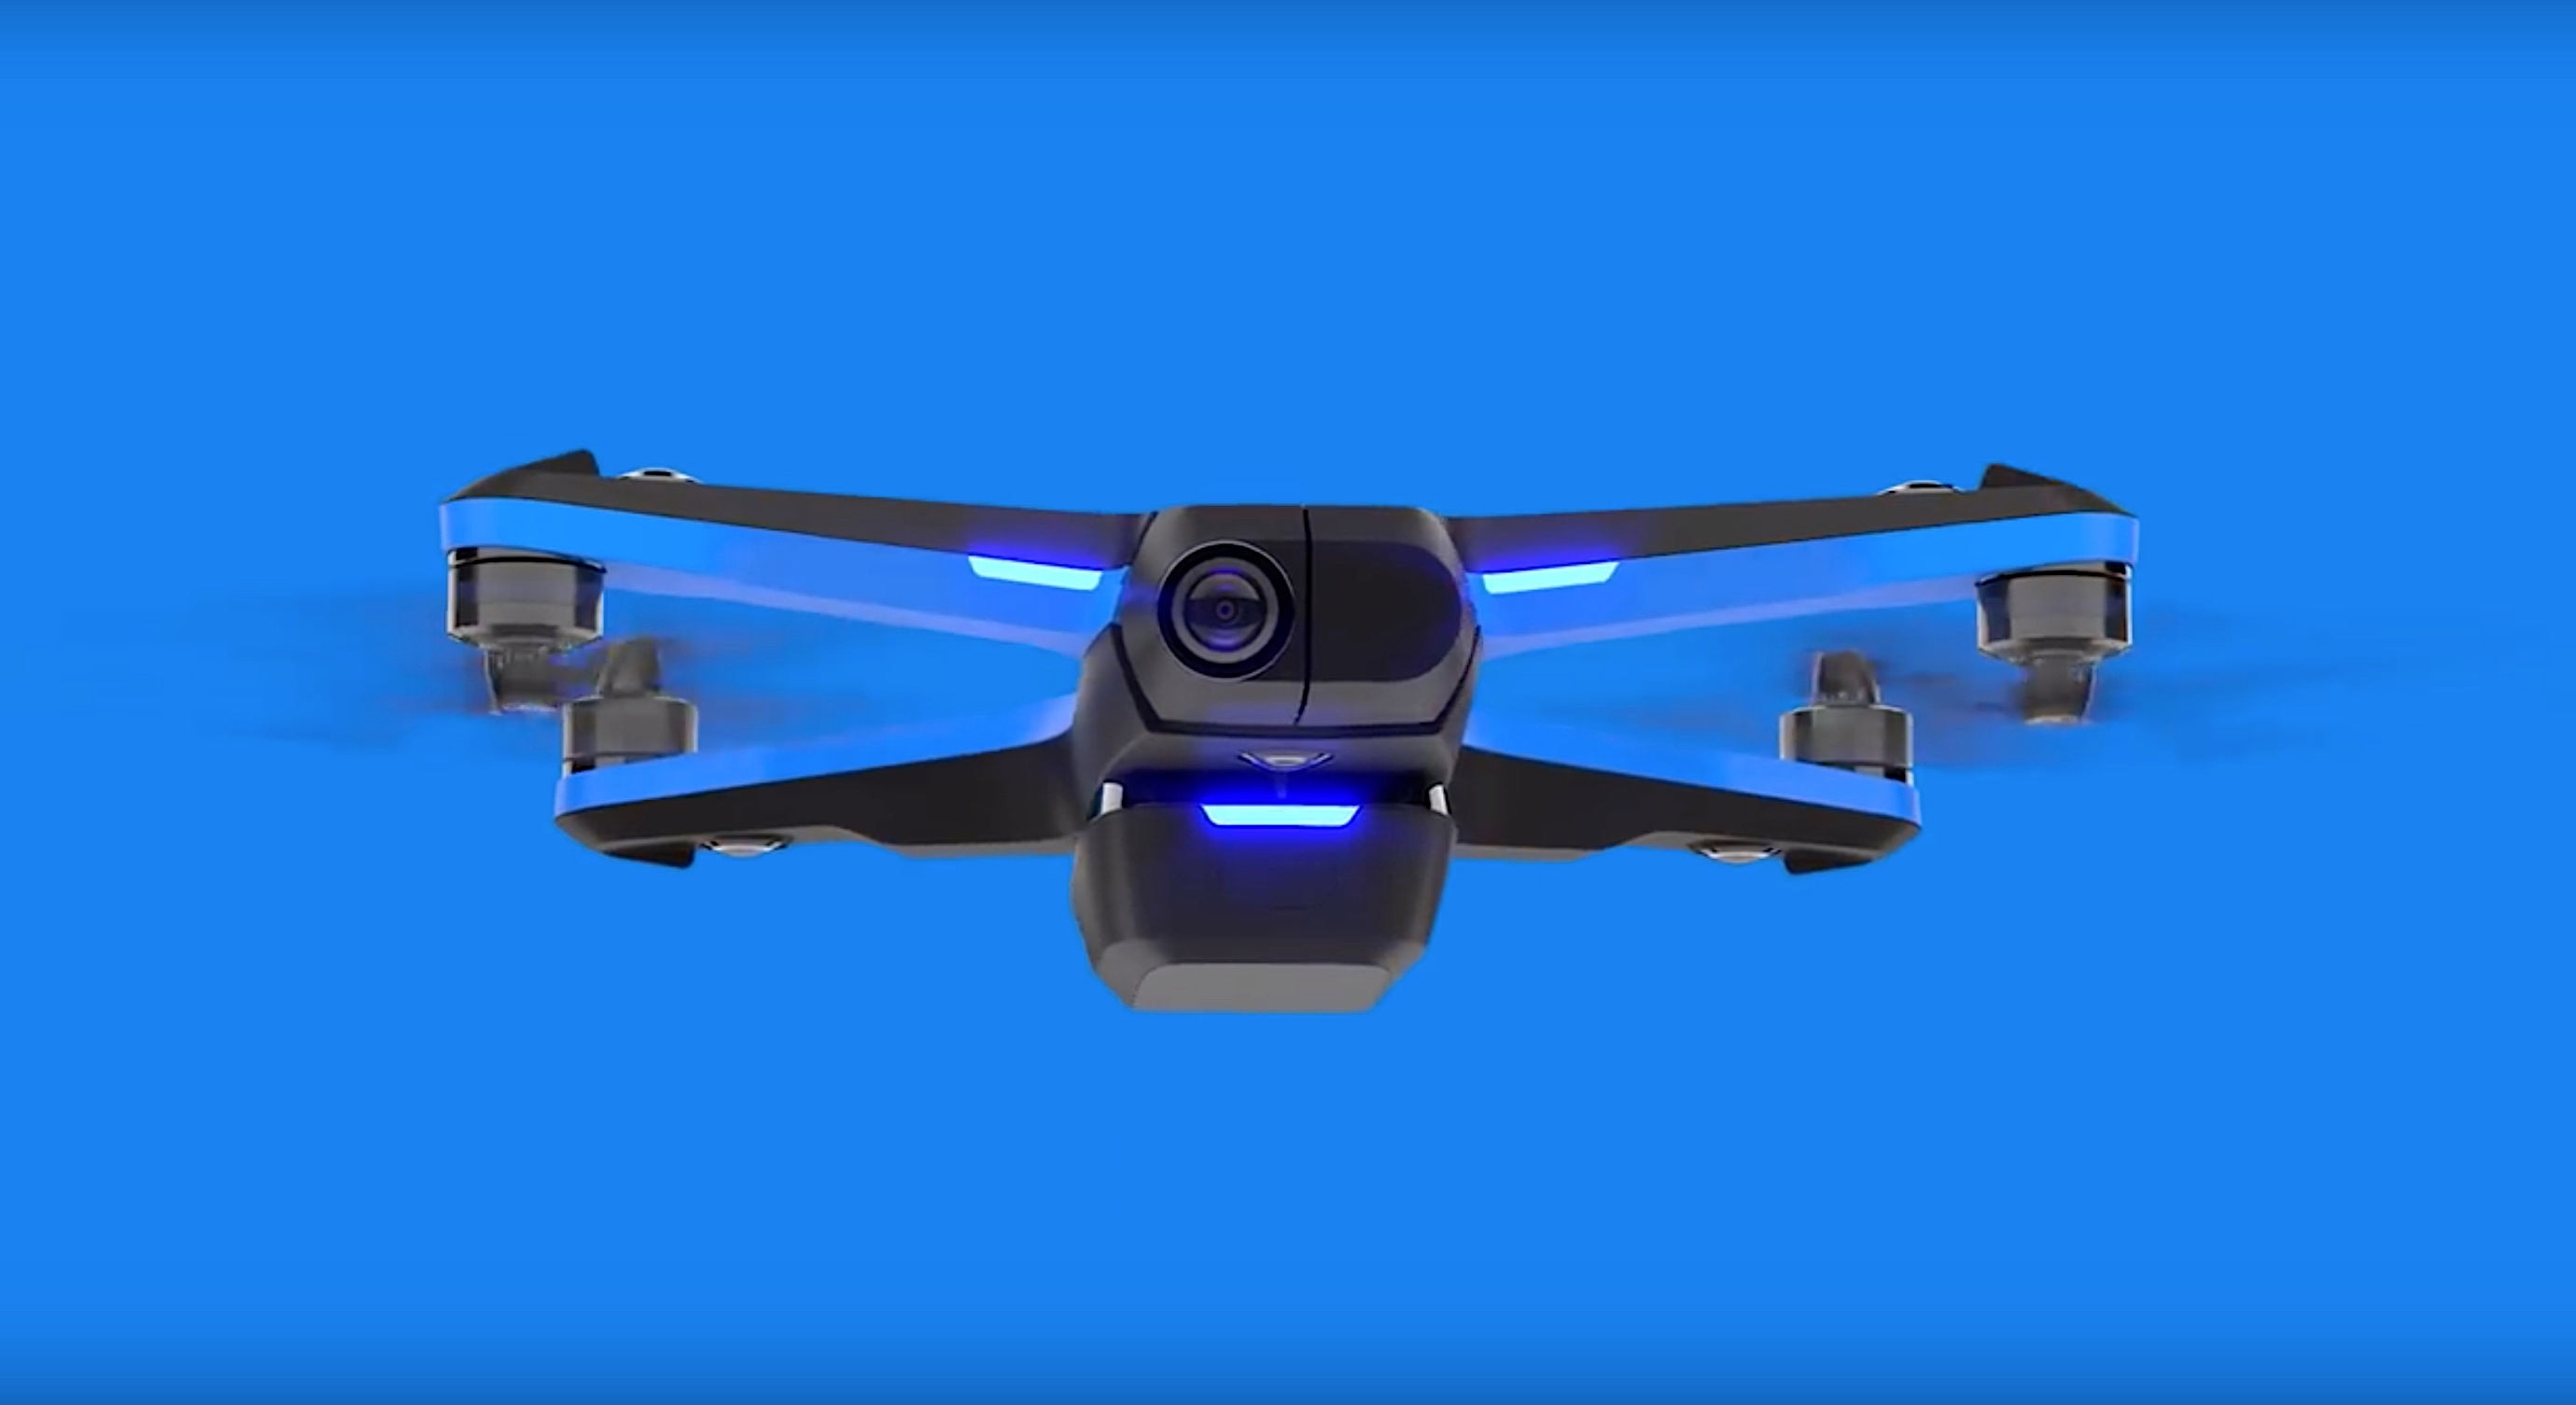 The Skydio 2 self-piloting drone